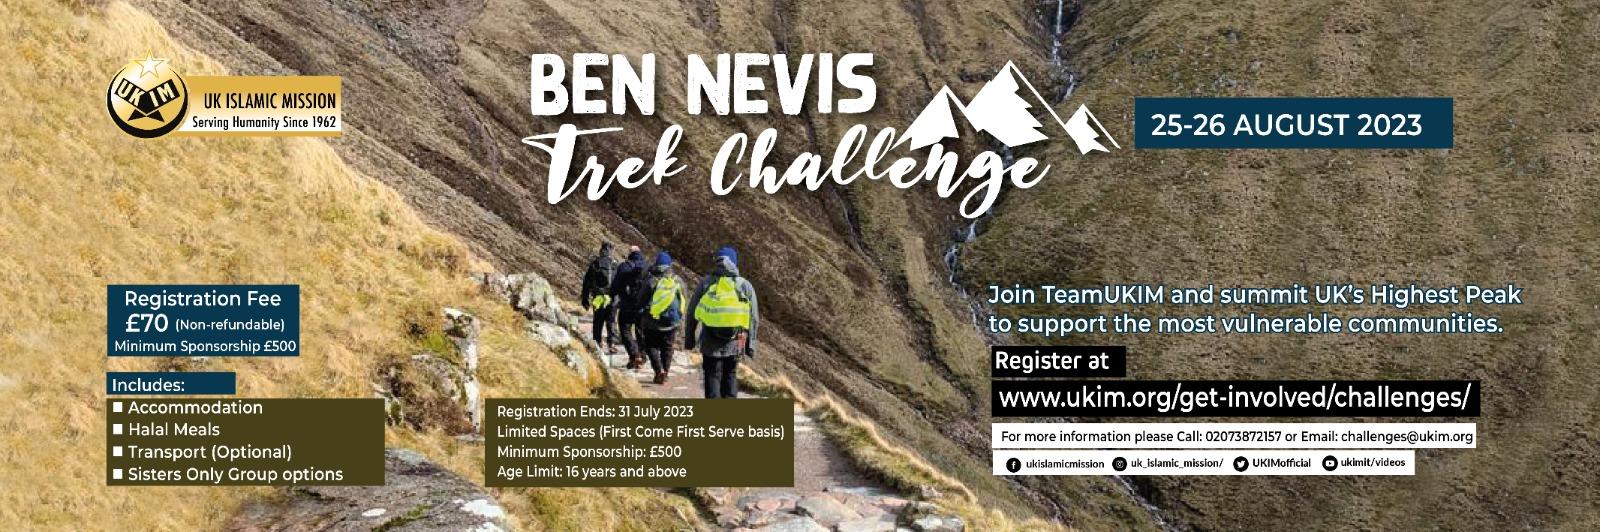 Summer Ben Nevis Challenge 2023